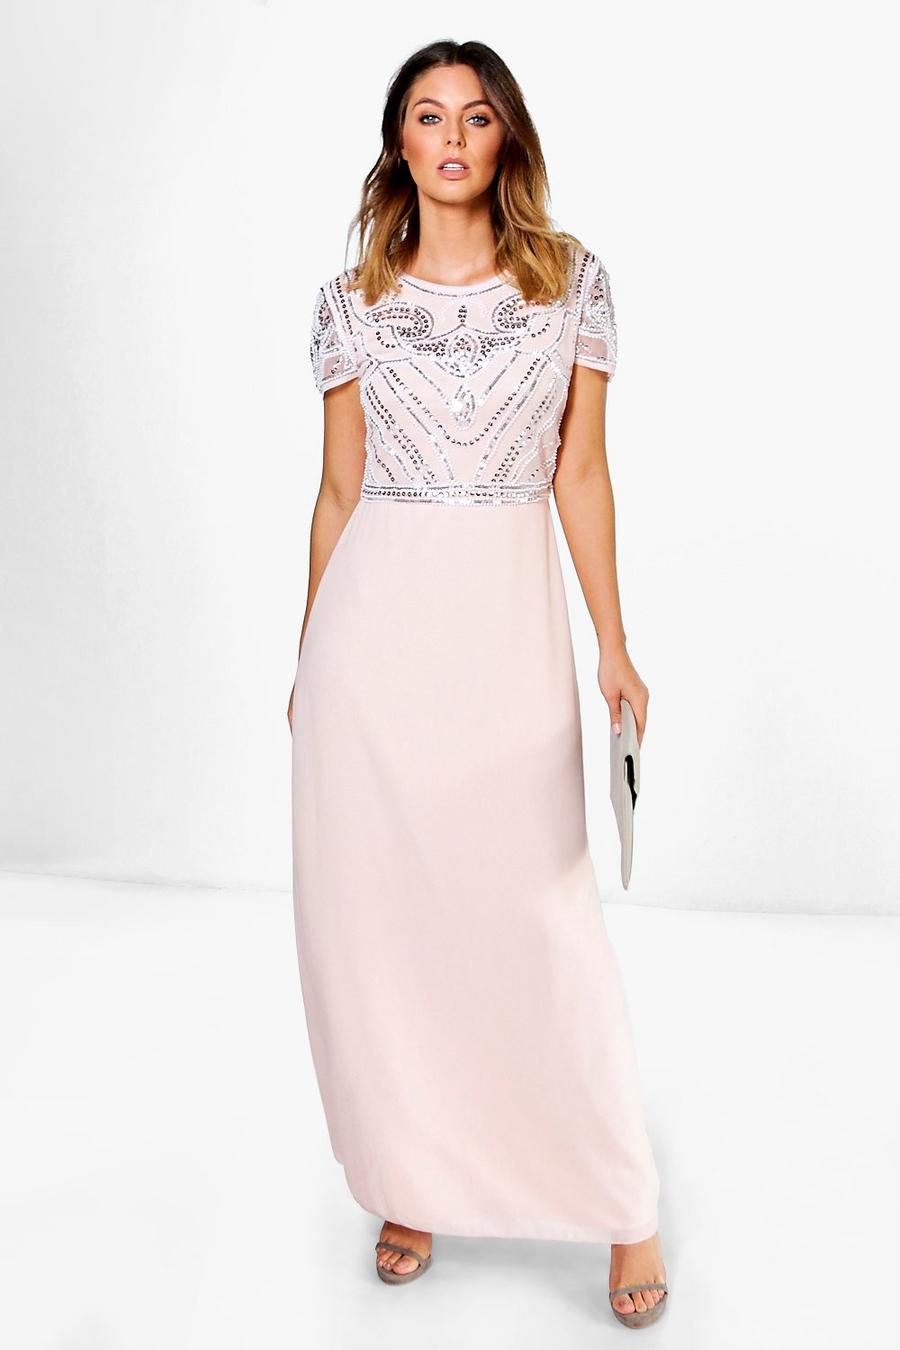 Blush pink Boutique Sequin Embellished Maxi Bridesmaid Dress